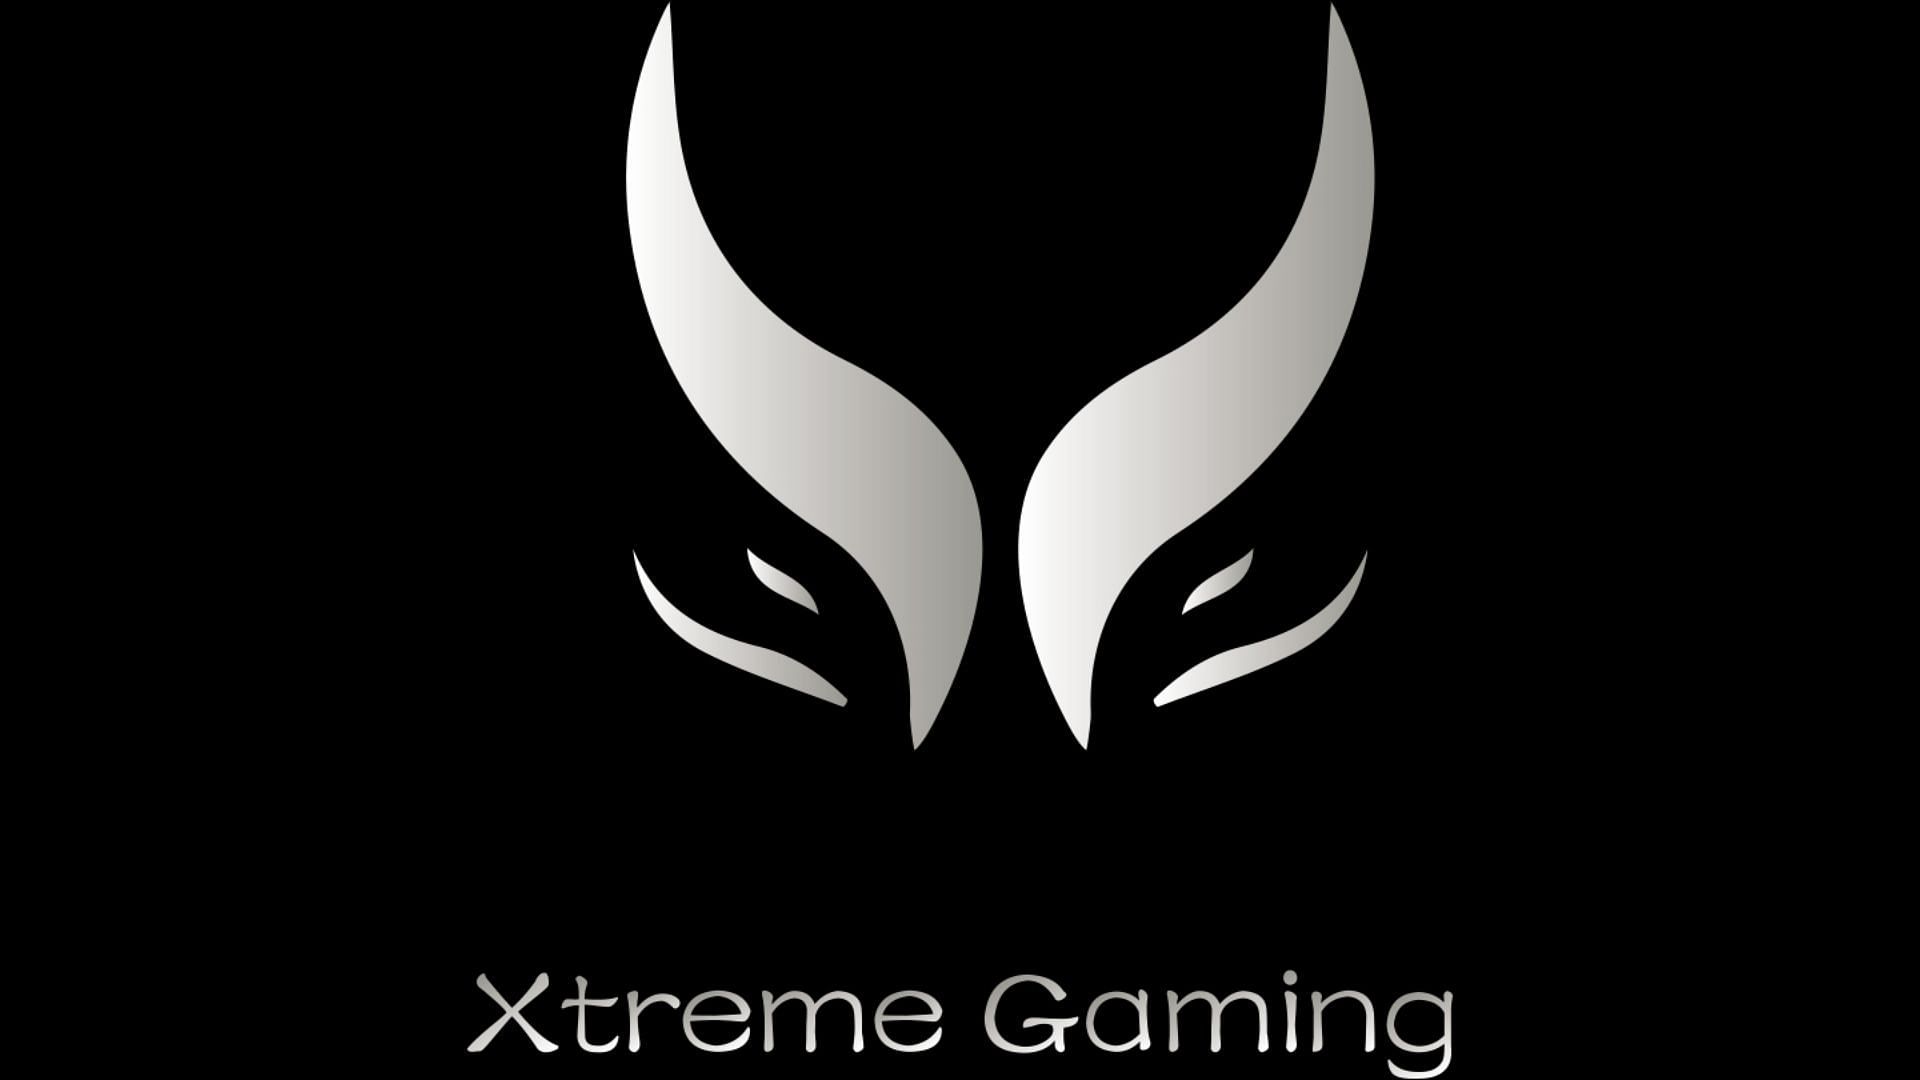 Xtreme Gaming official logo (Image via Liquipedia)